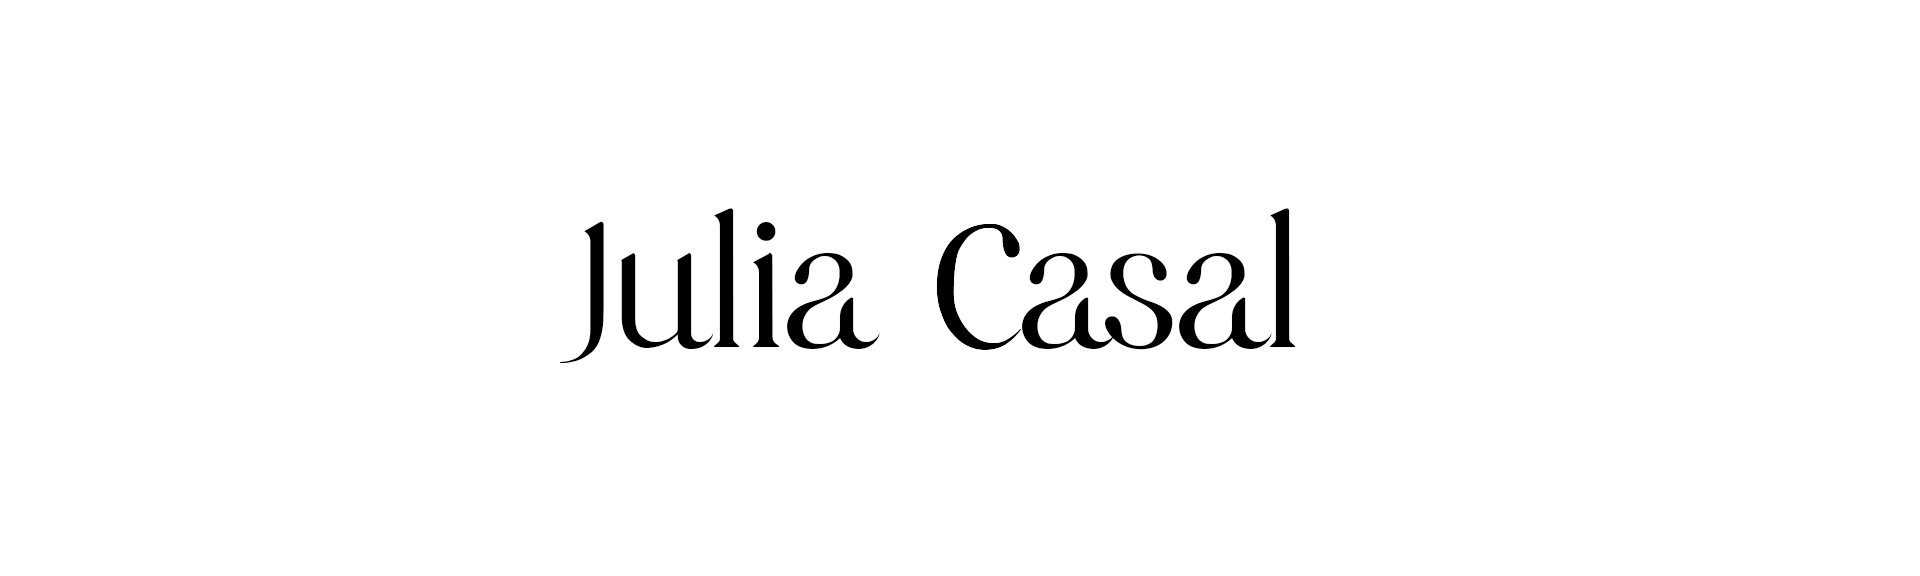 Julia Casal